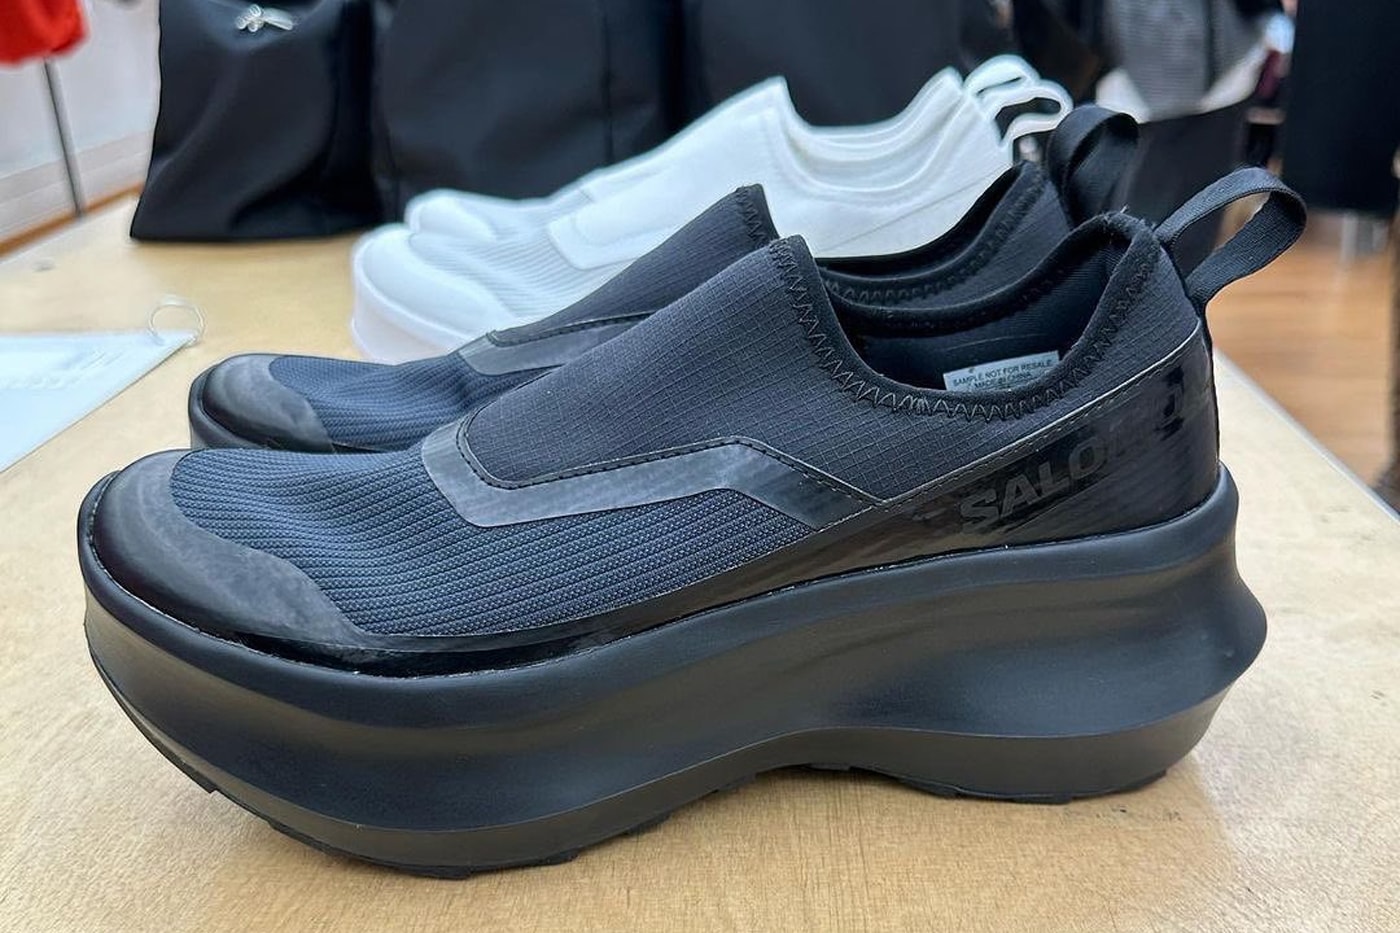 COMME des GARÇONS Salomon FW23 footwear sneakers white black laceless release info date price